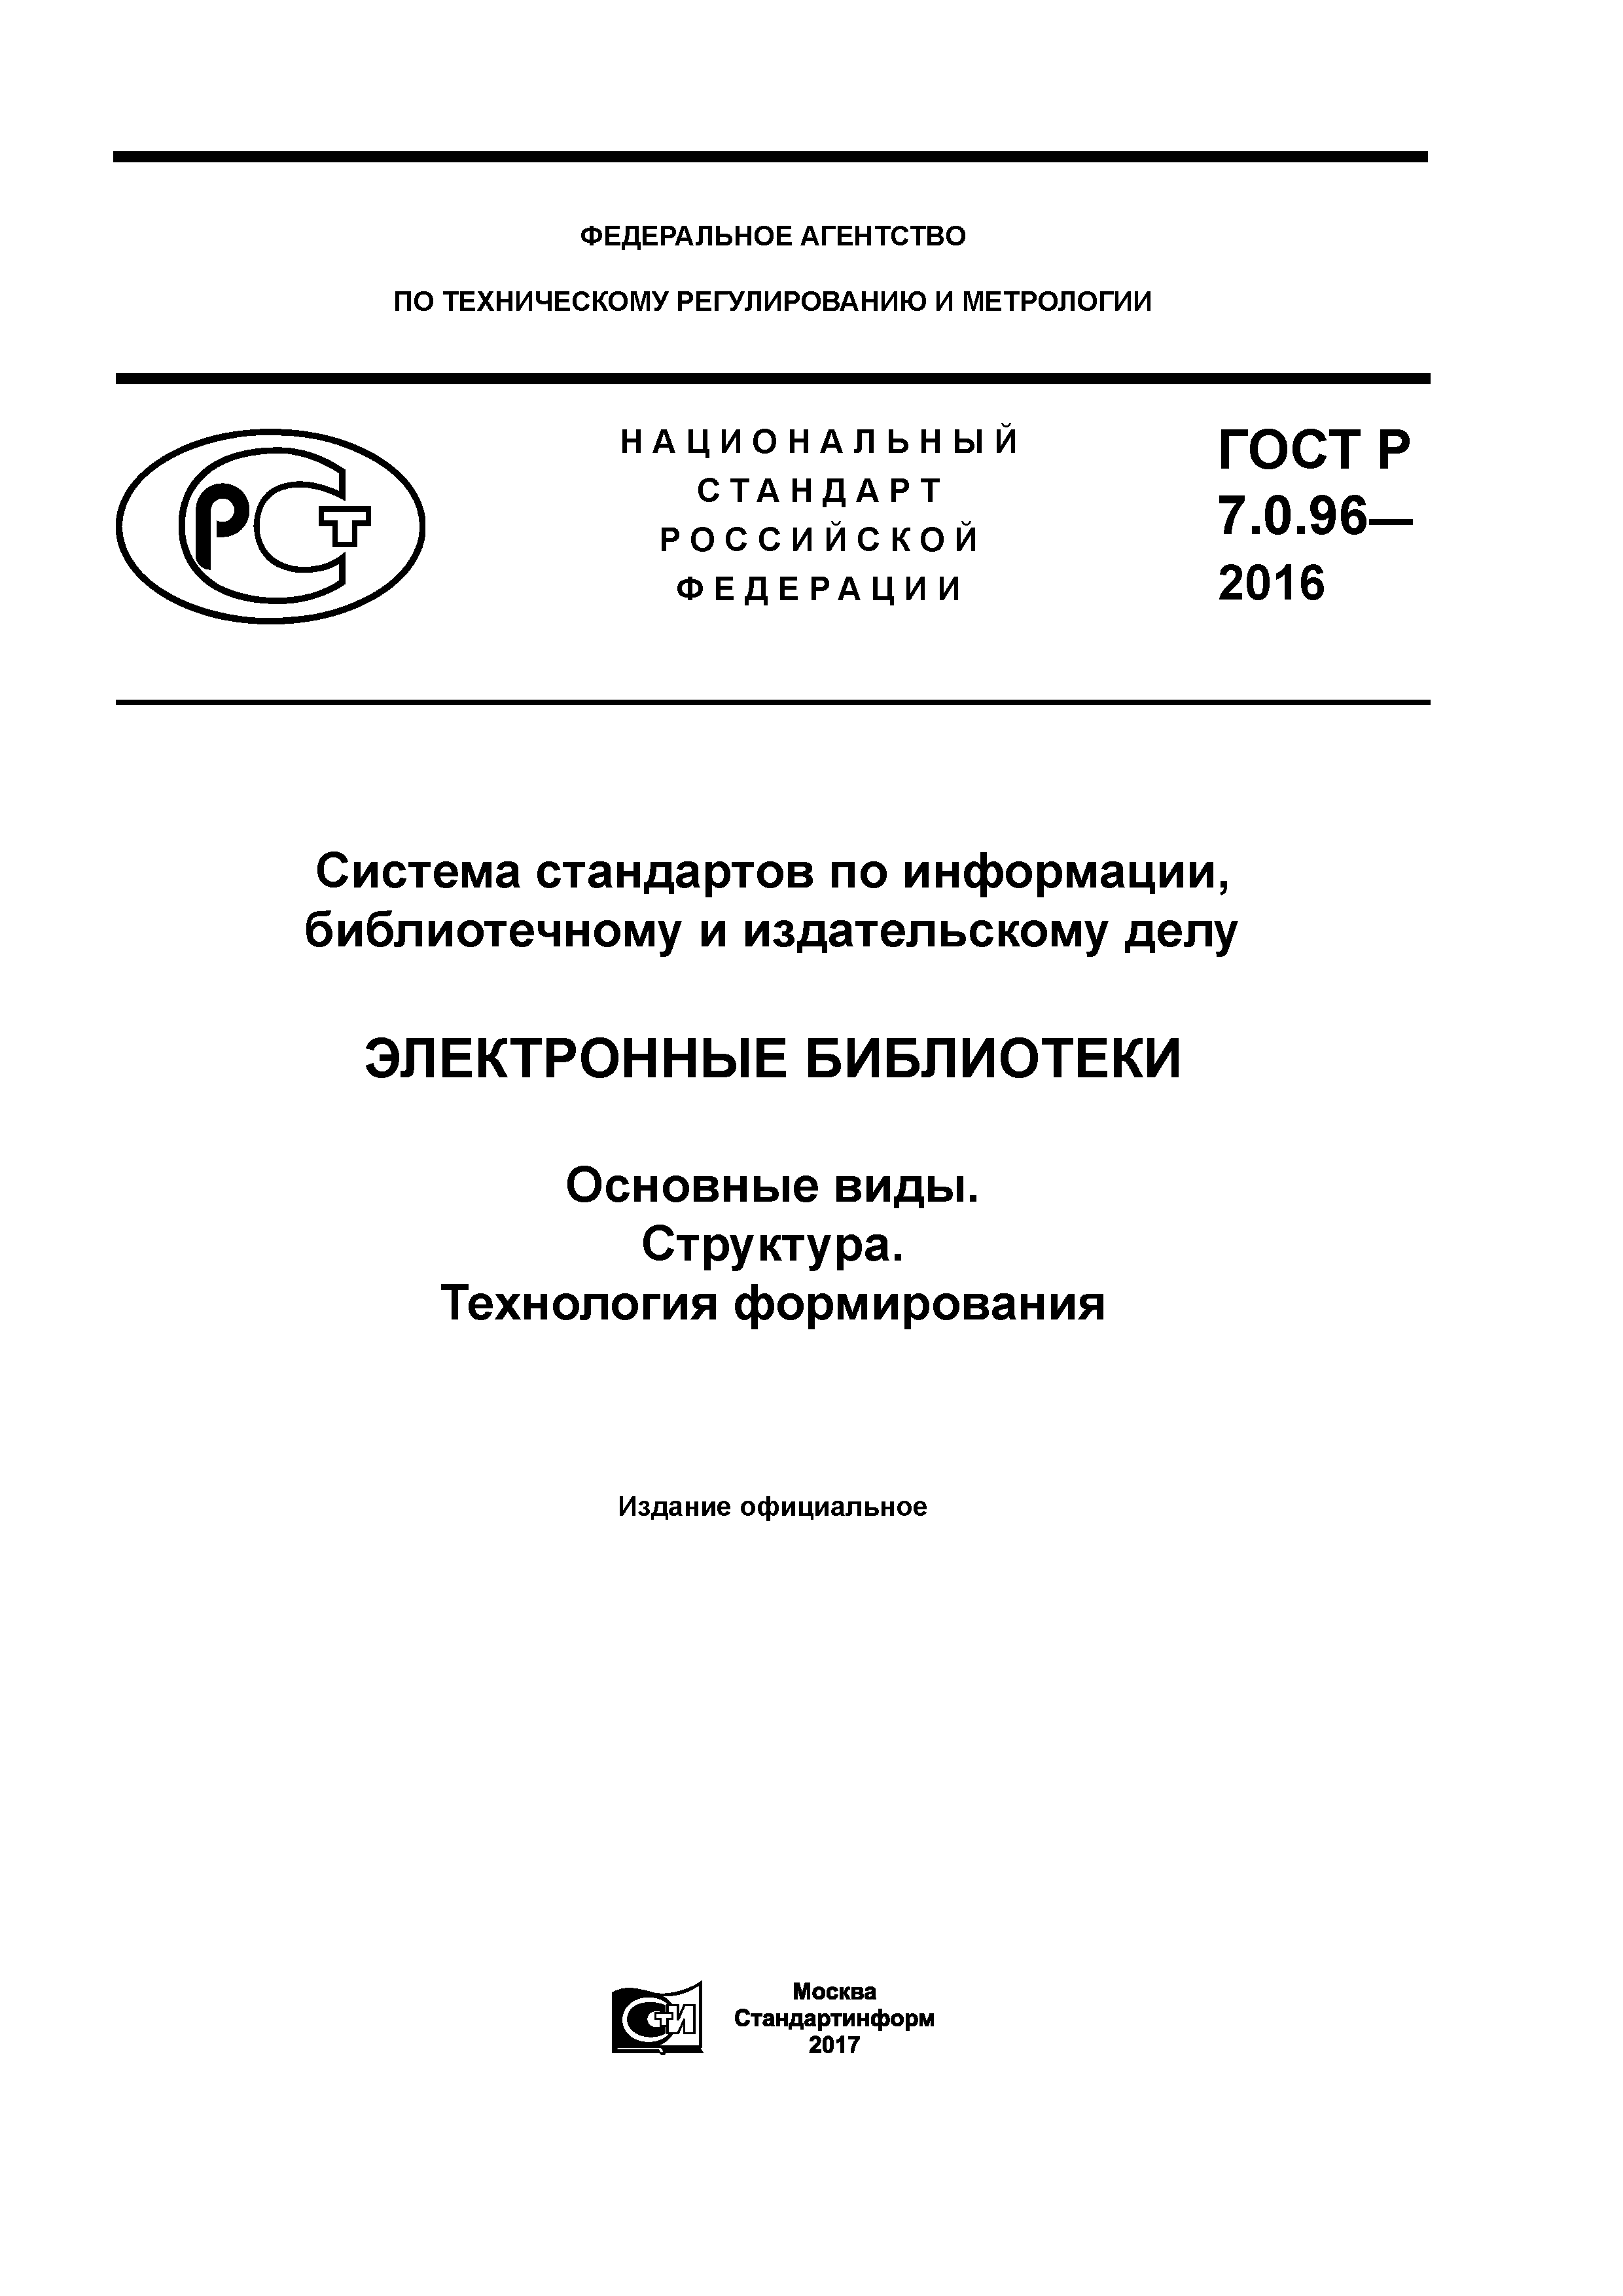 ГОСТ Р 7.0.96-2016